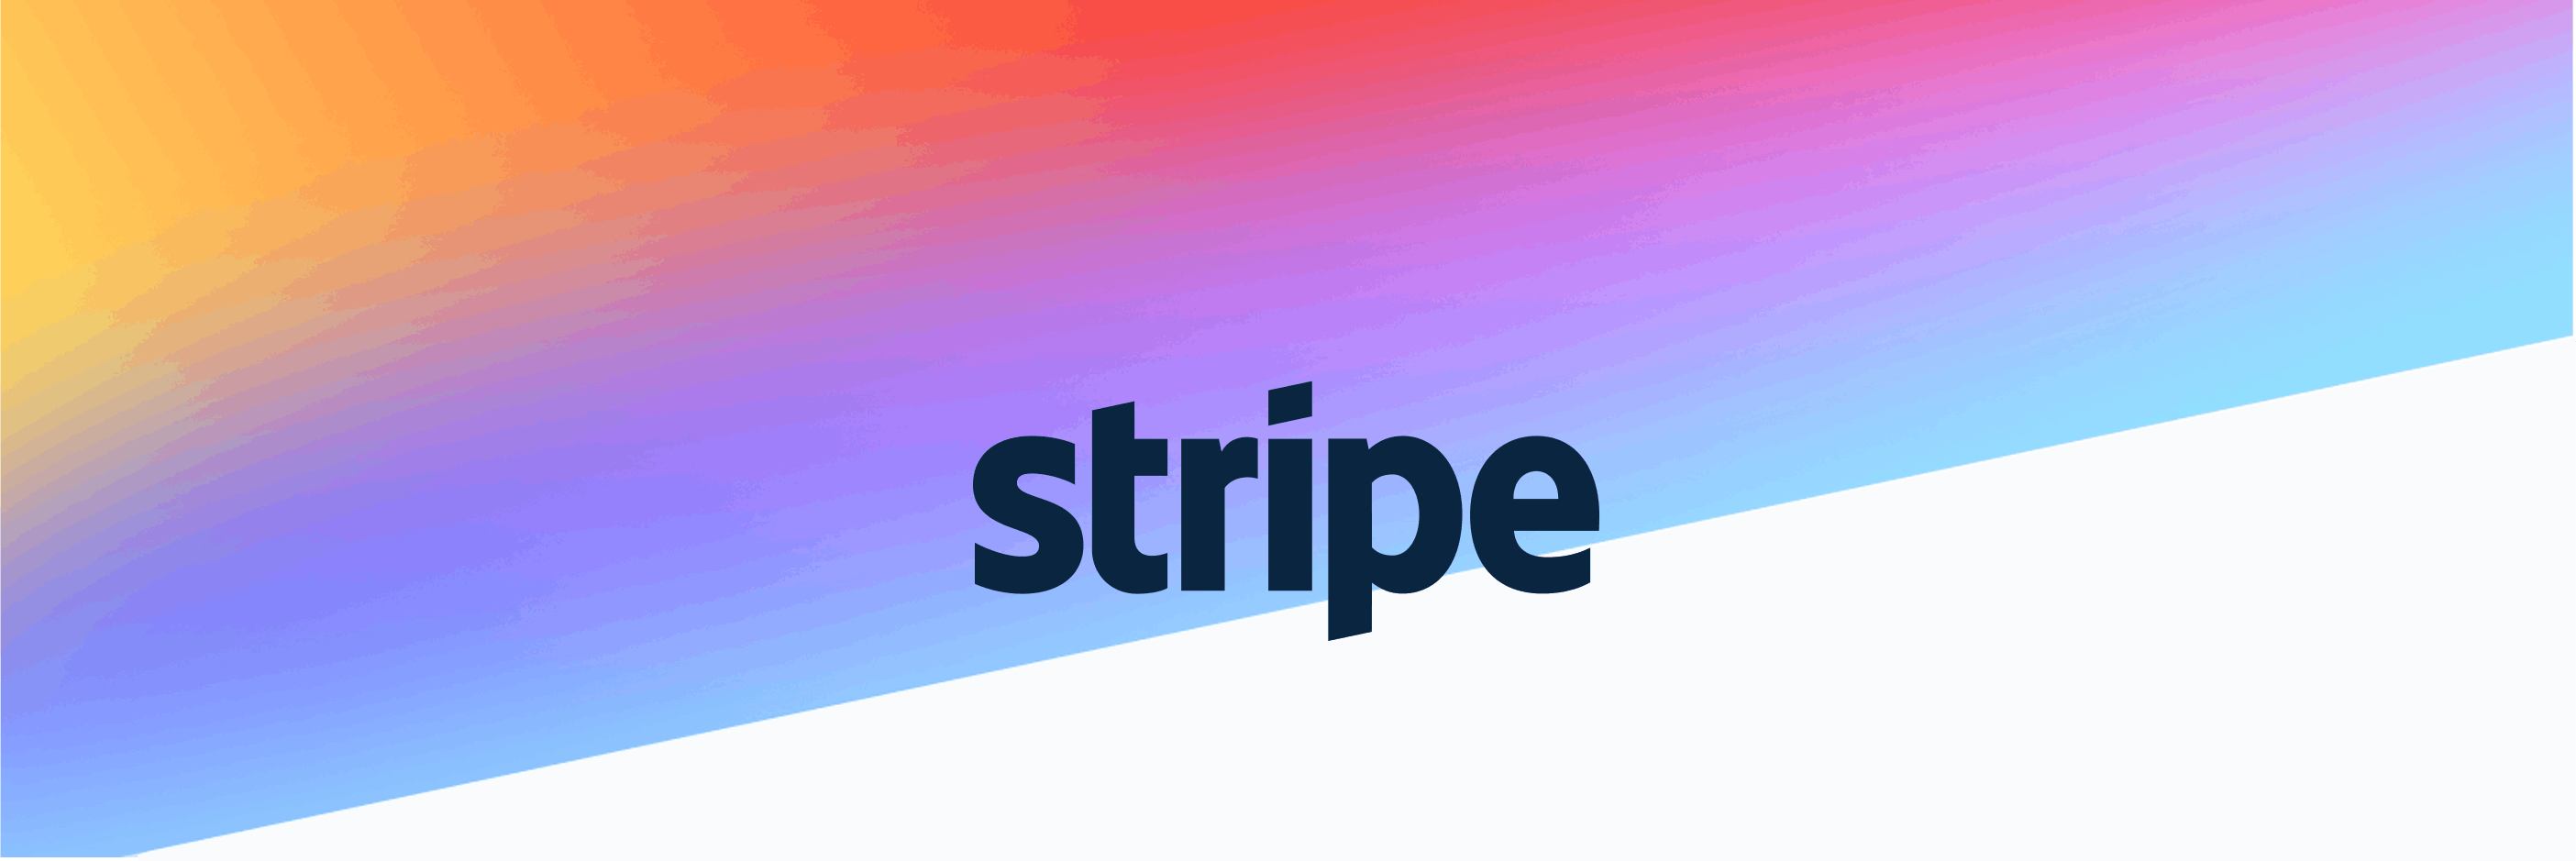 Stripe Background with Logo